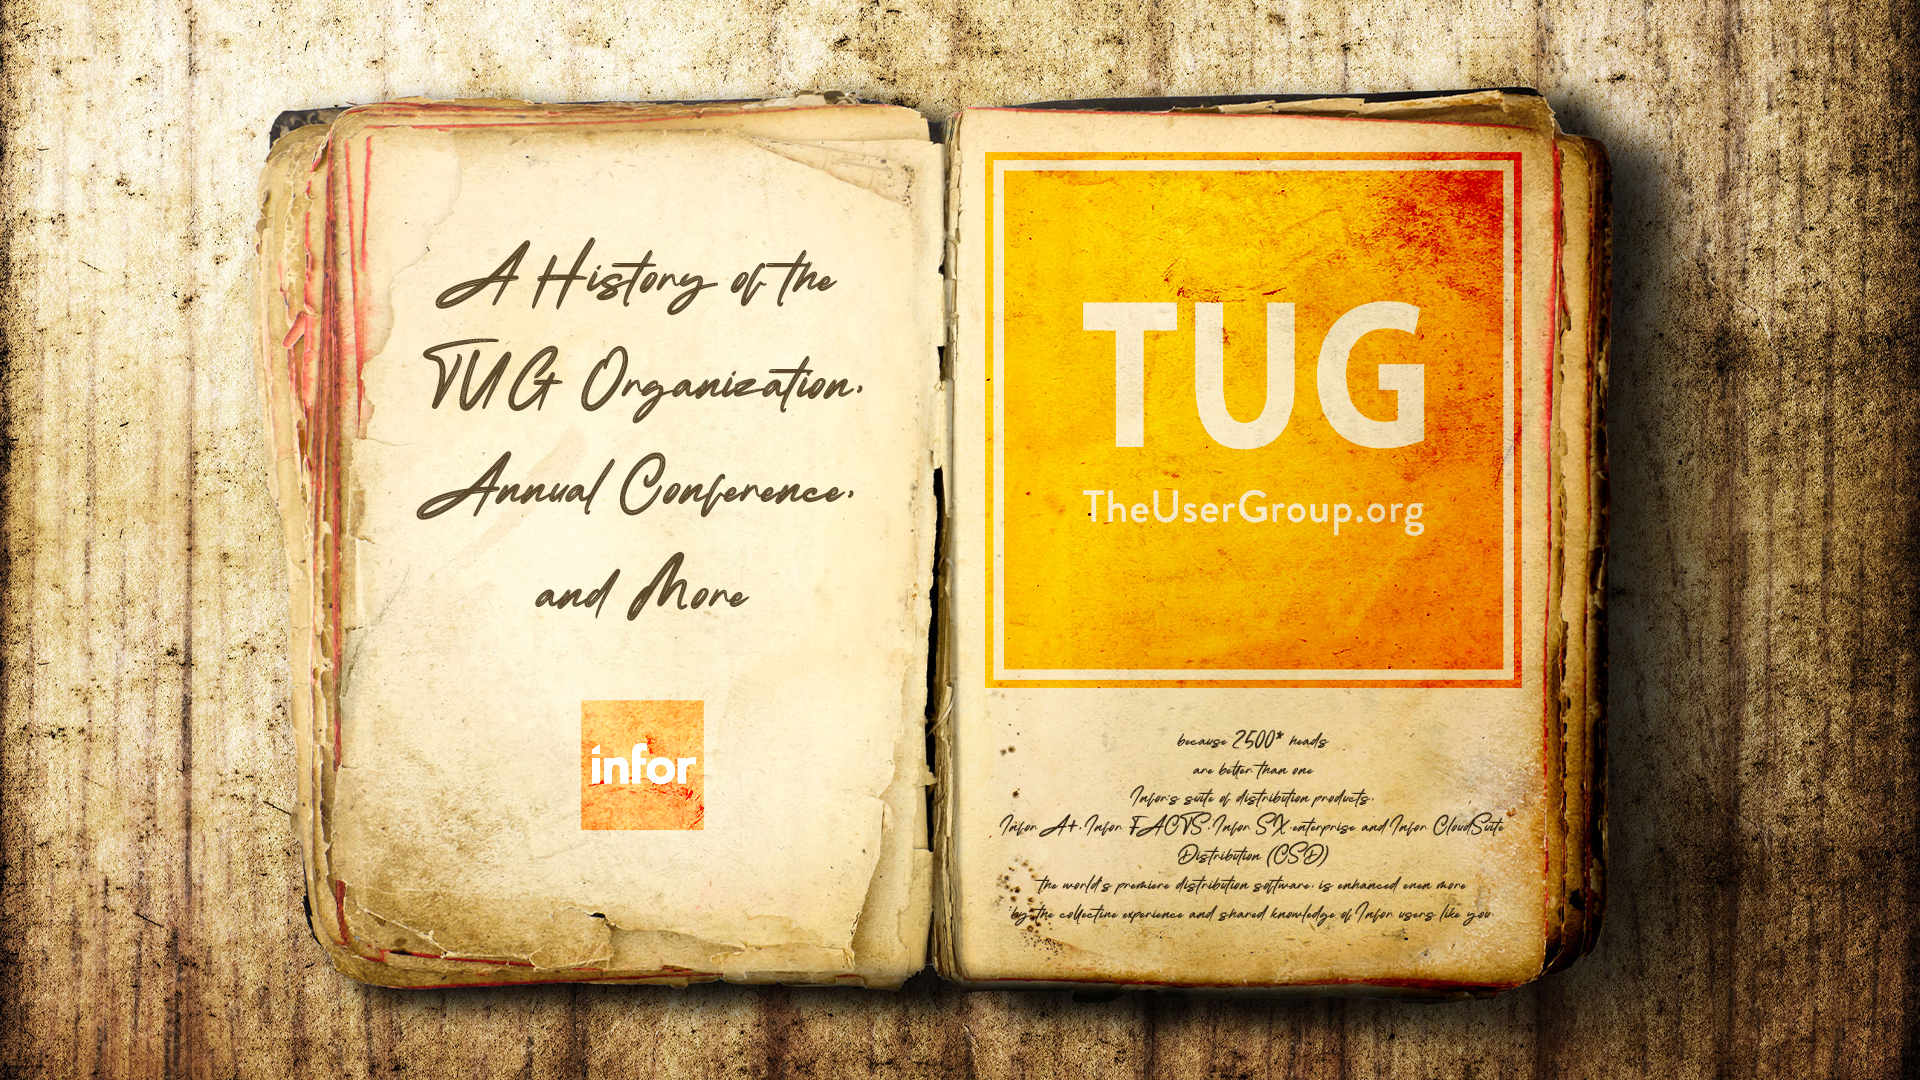 TUG org history